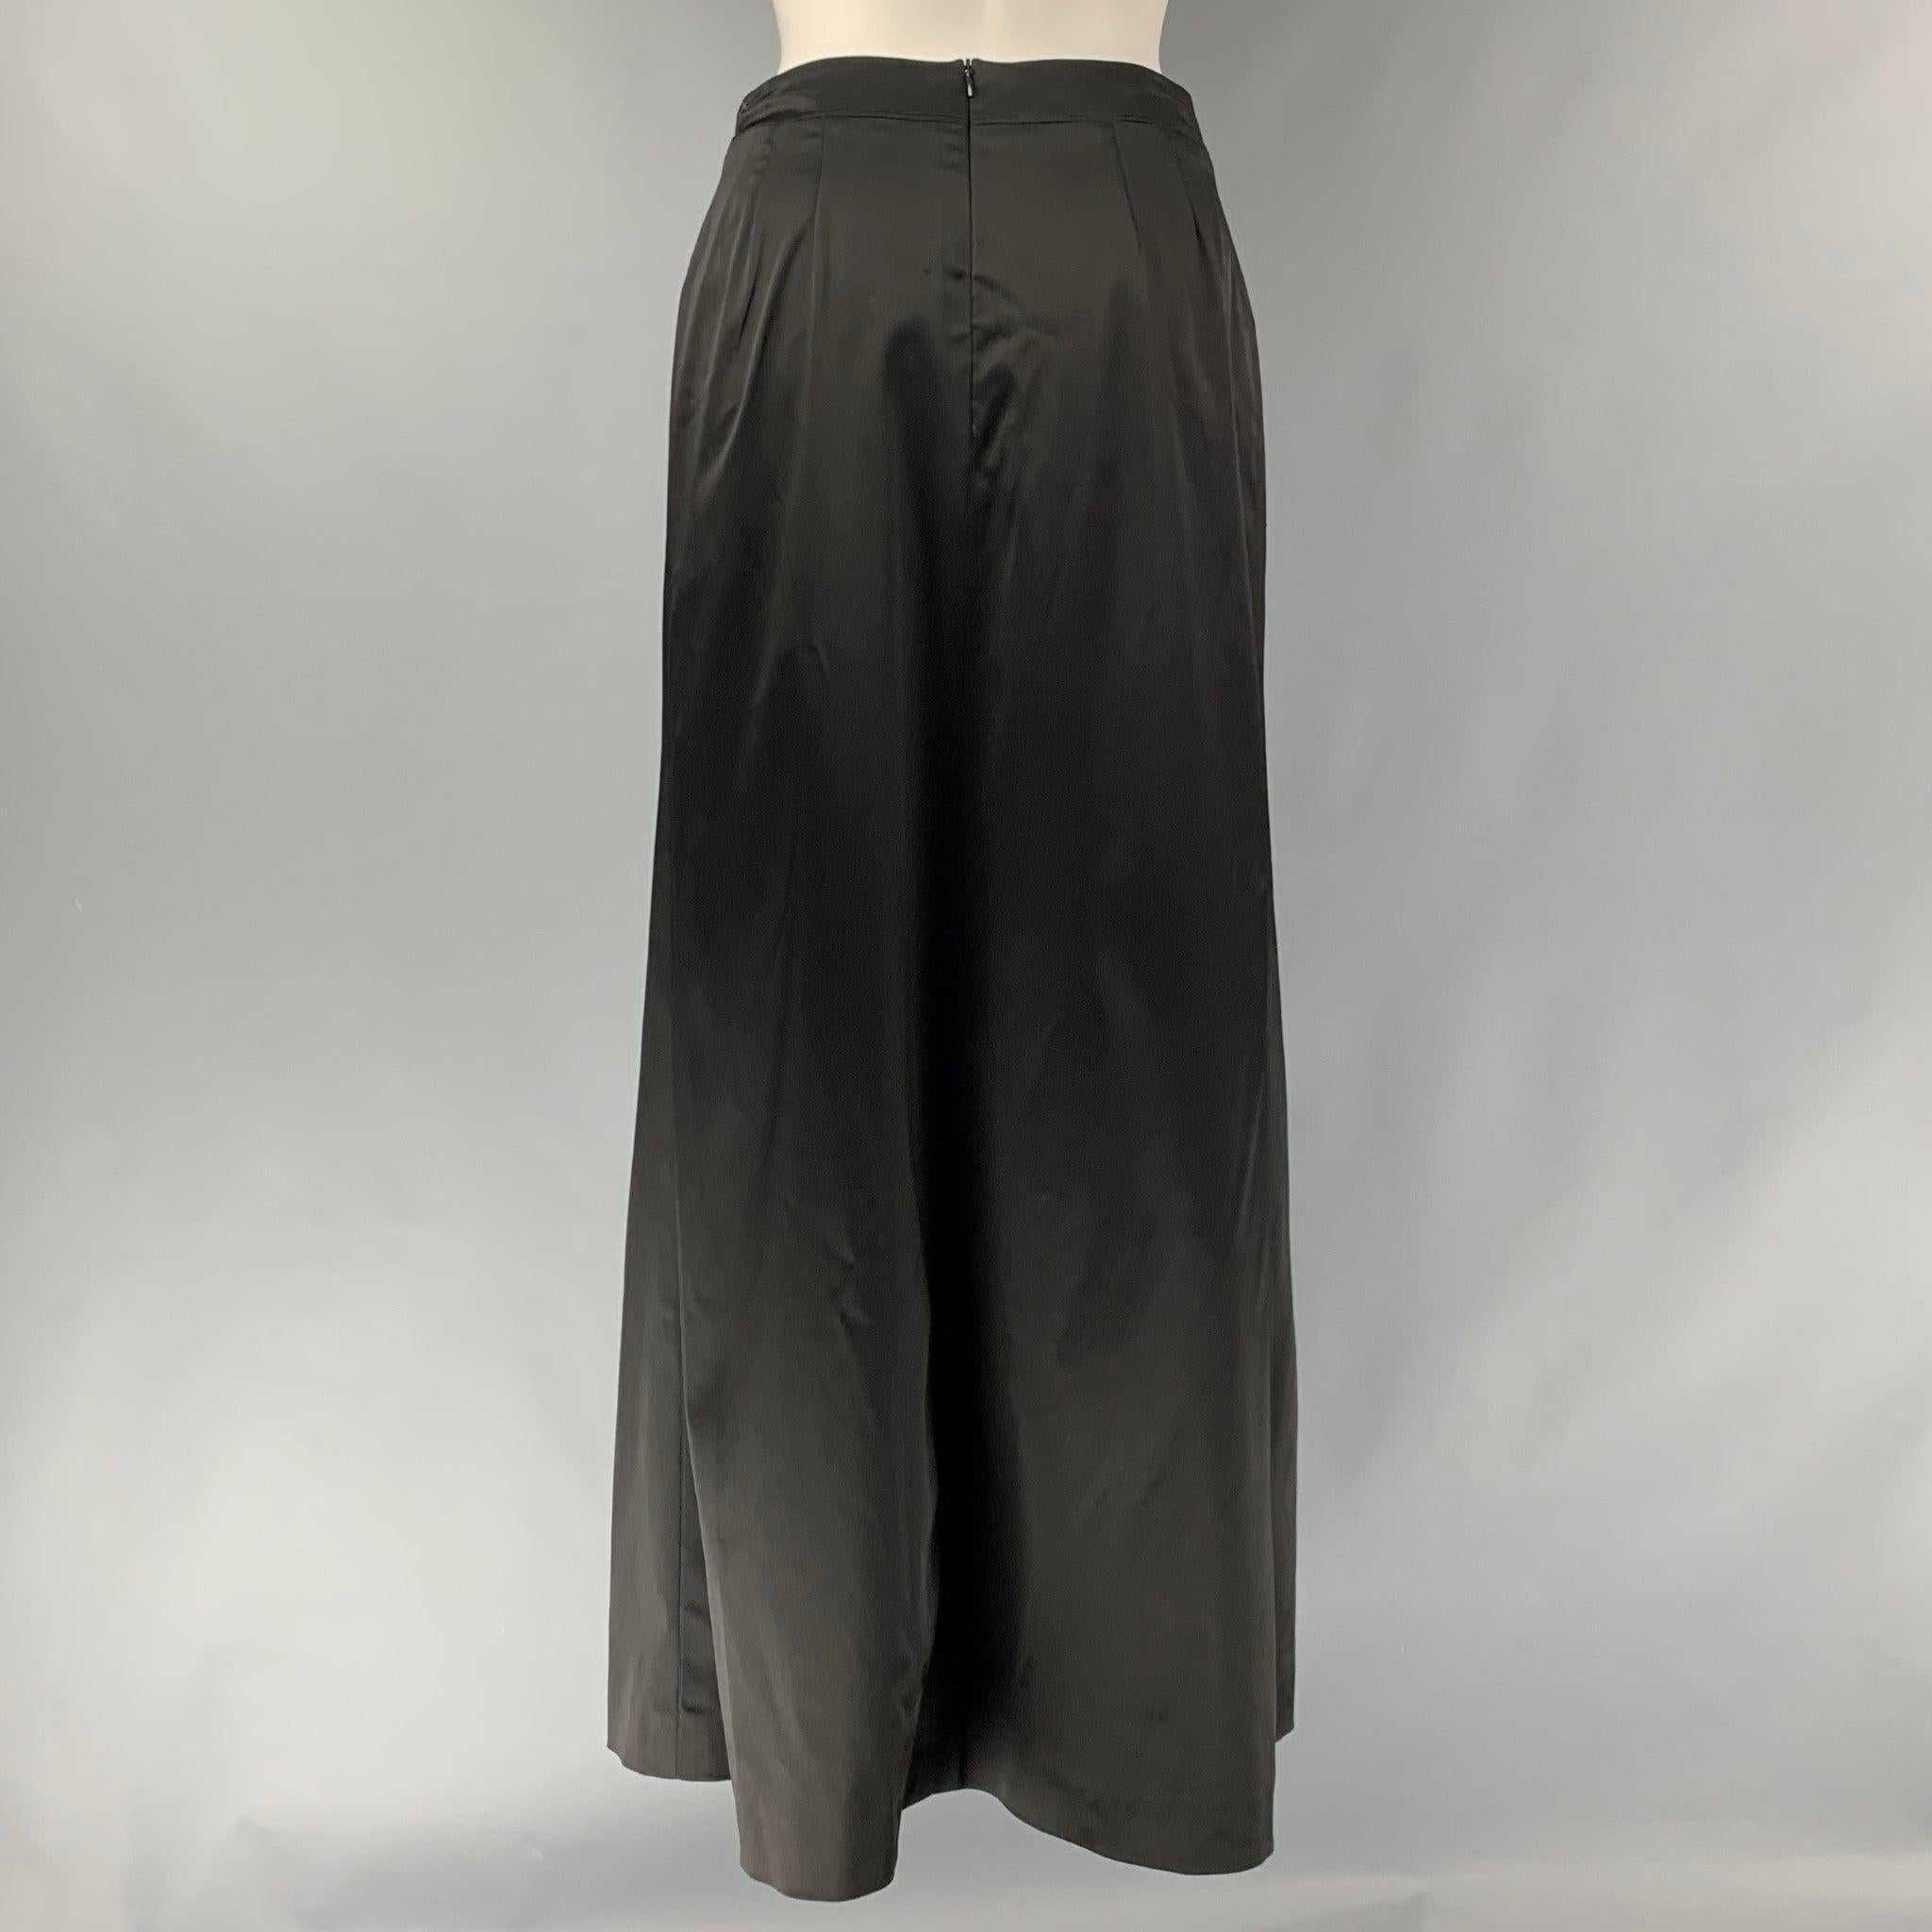 JIL SANDER Size 6 Black Acetate Blend Solid Evening Long Skirt In Excellent Condition For Sale In San Francisco, CA